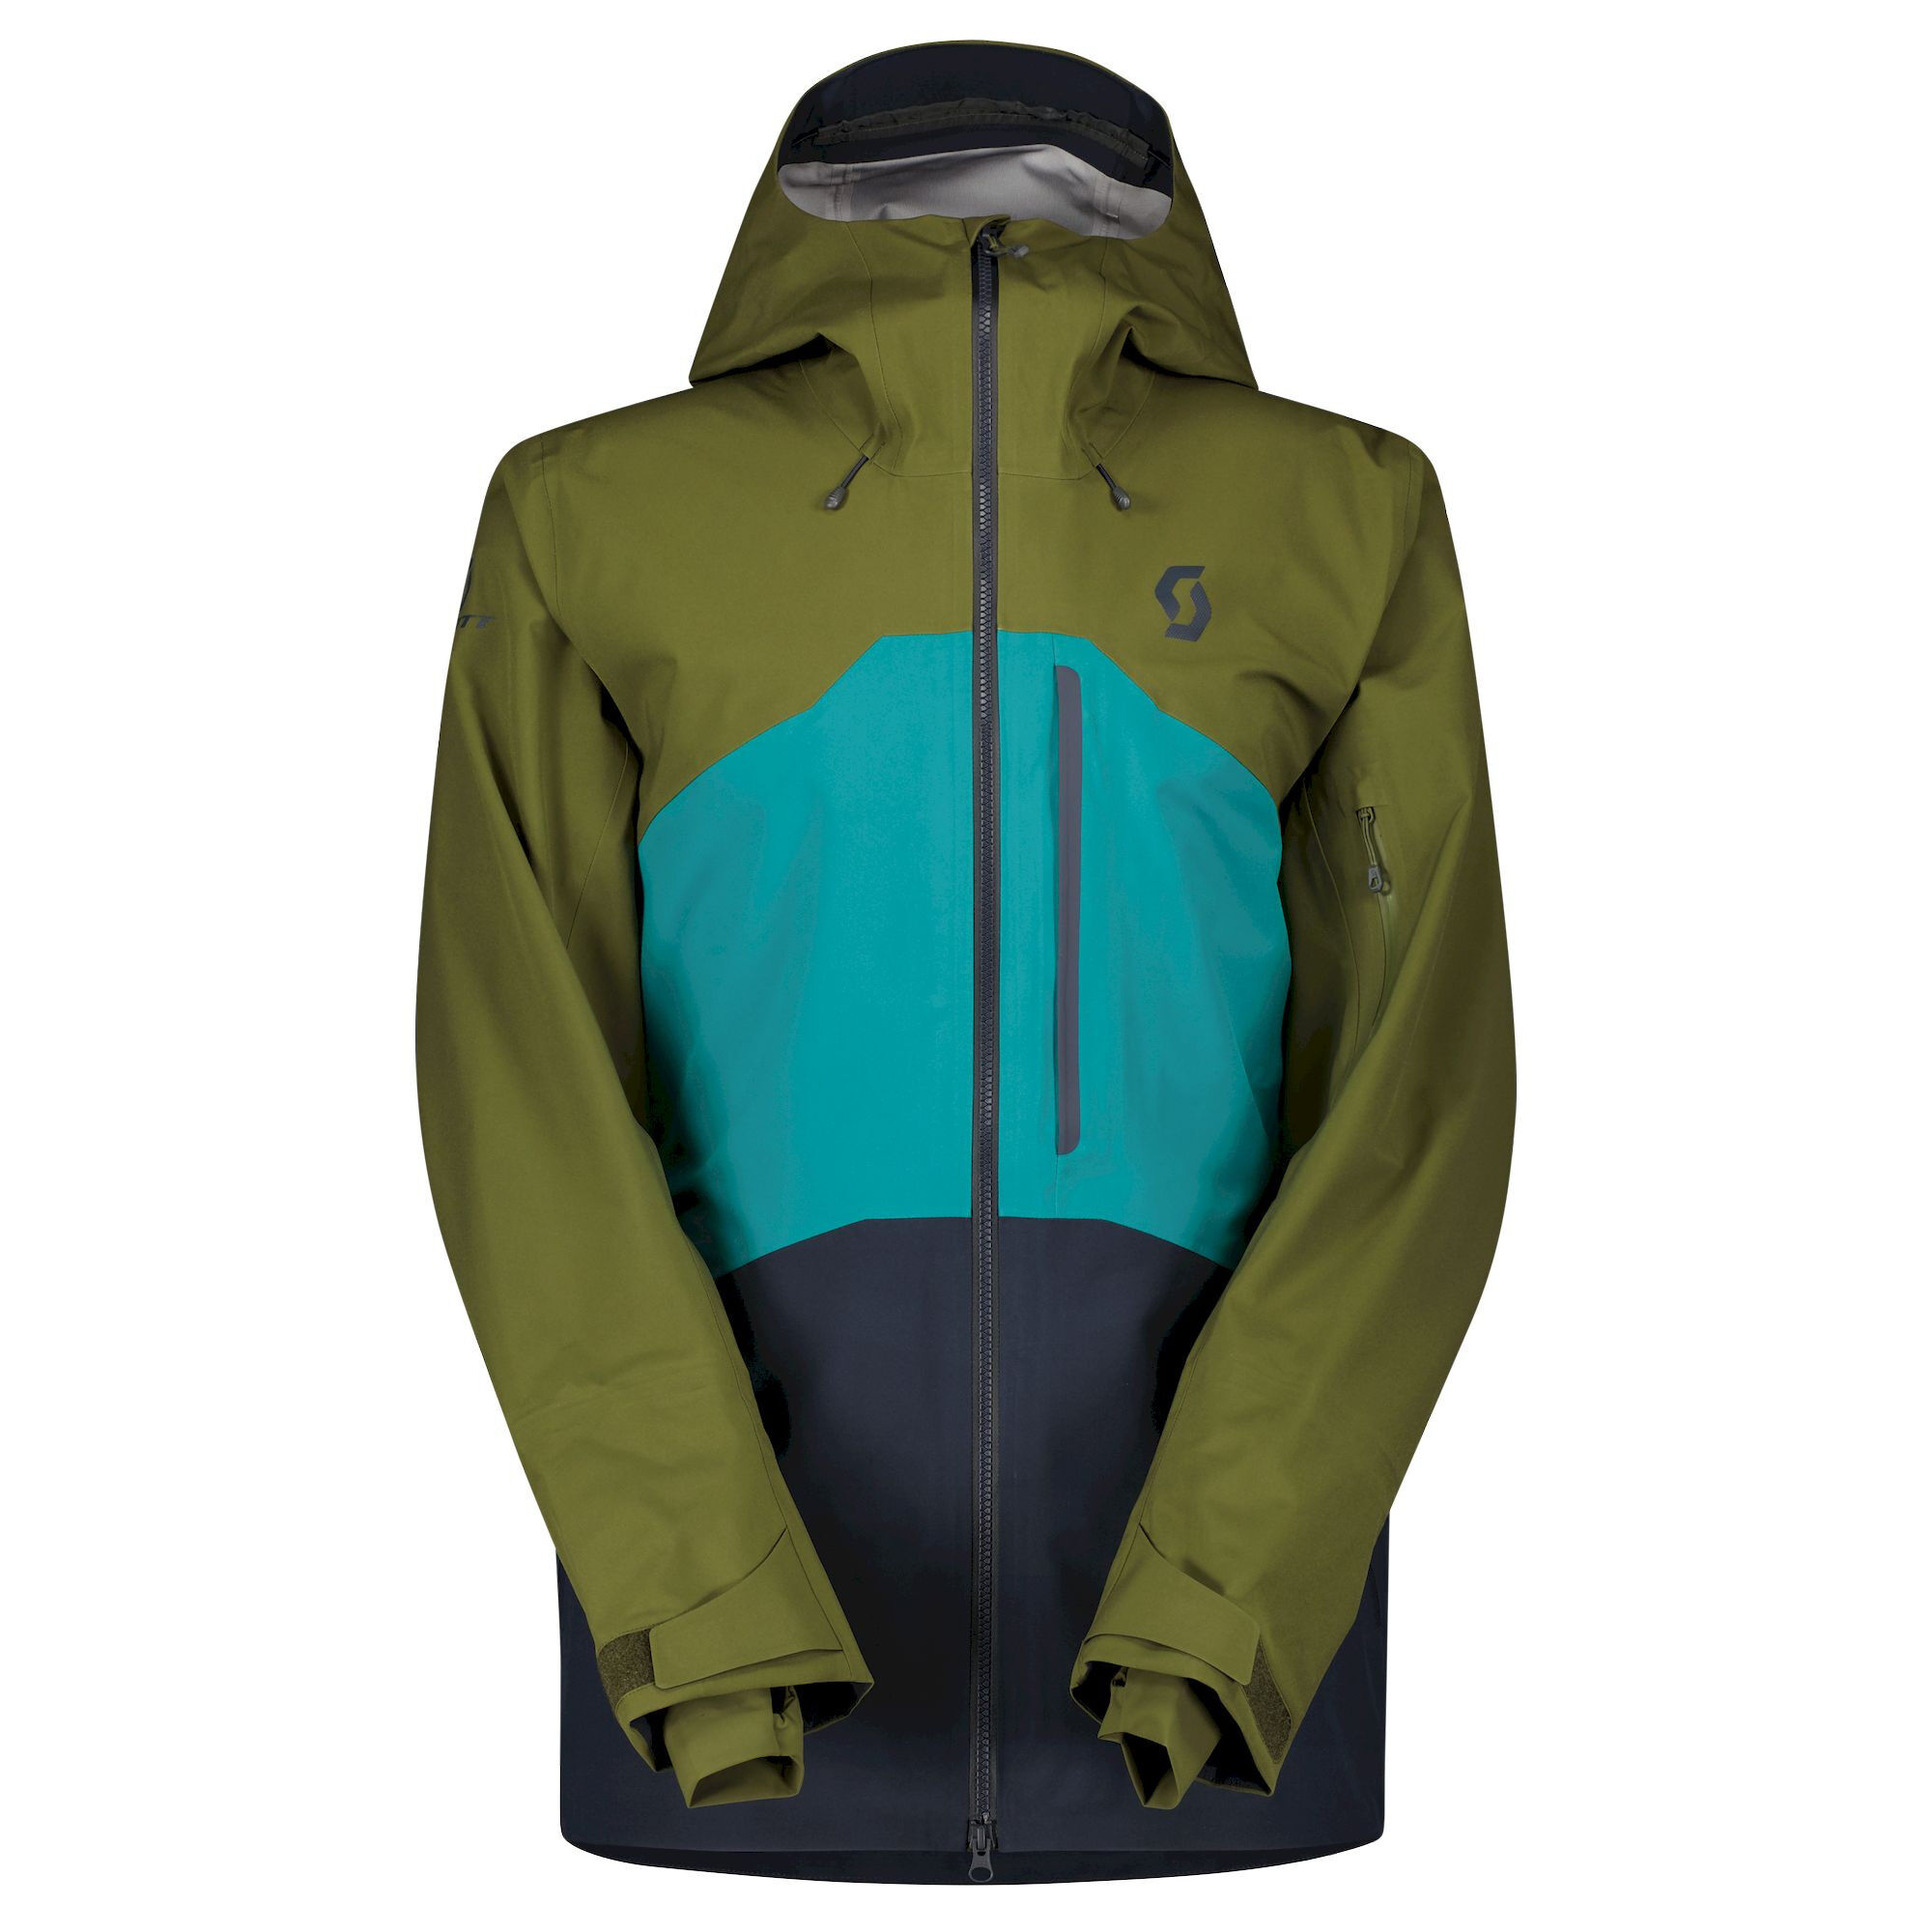 Scott Vertic 3L - Ski jacket - Men's